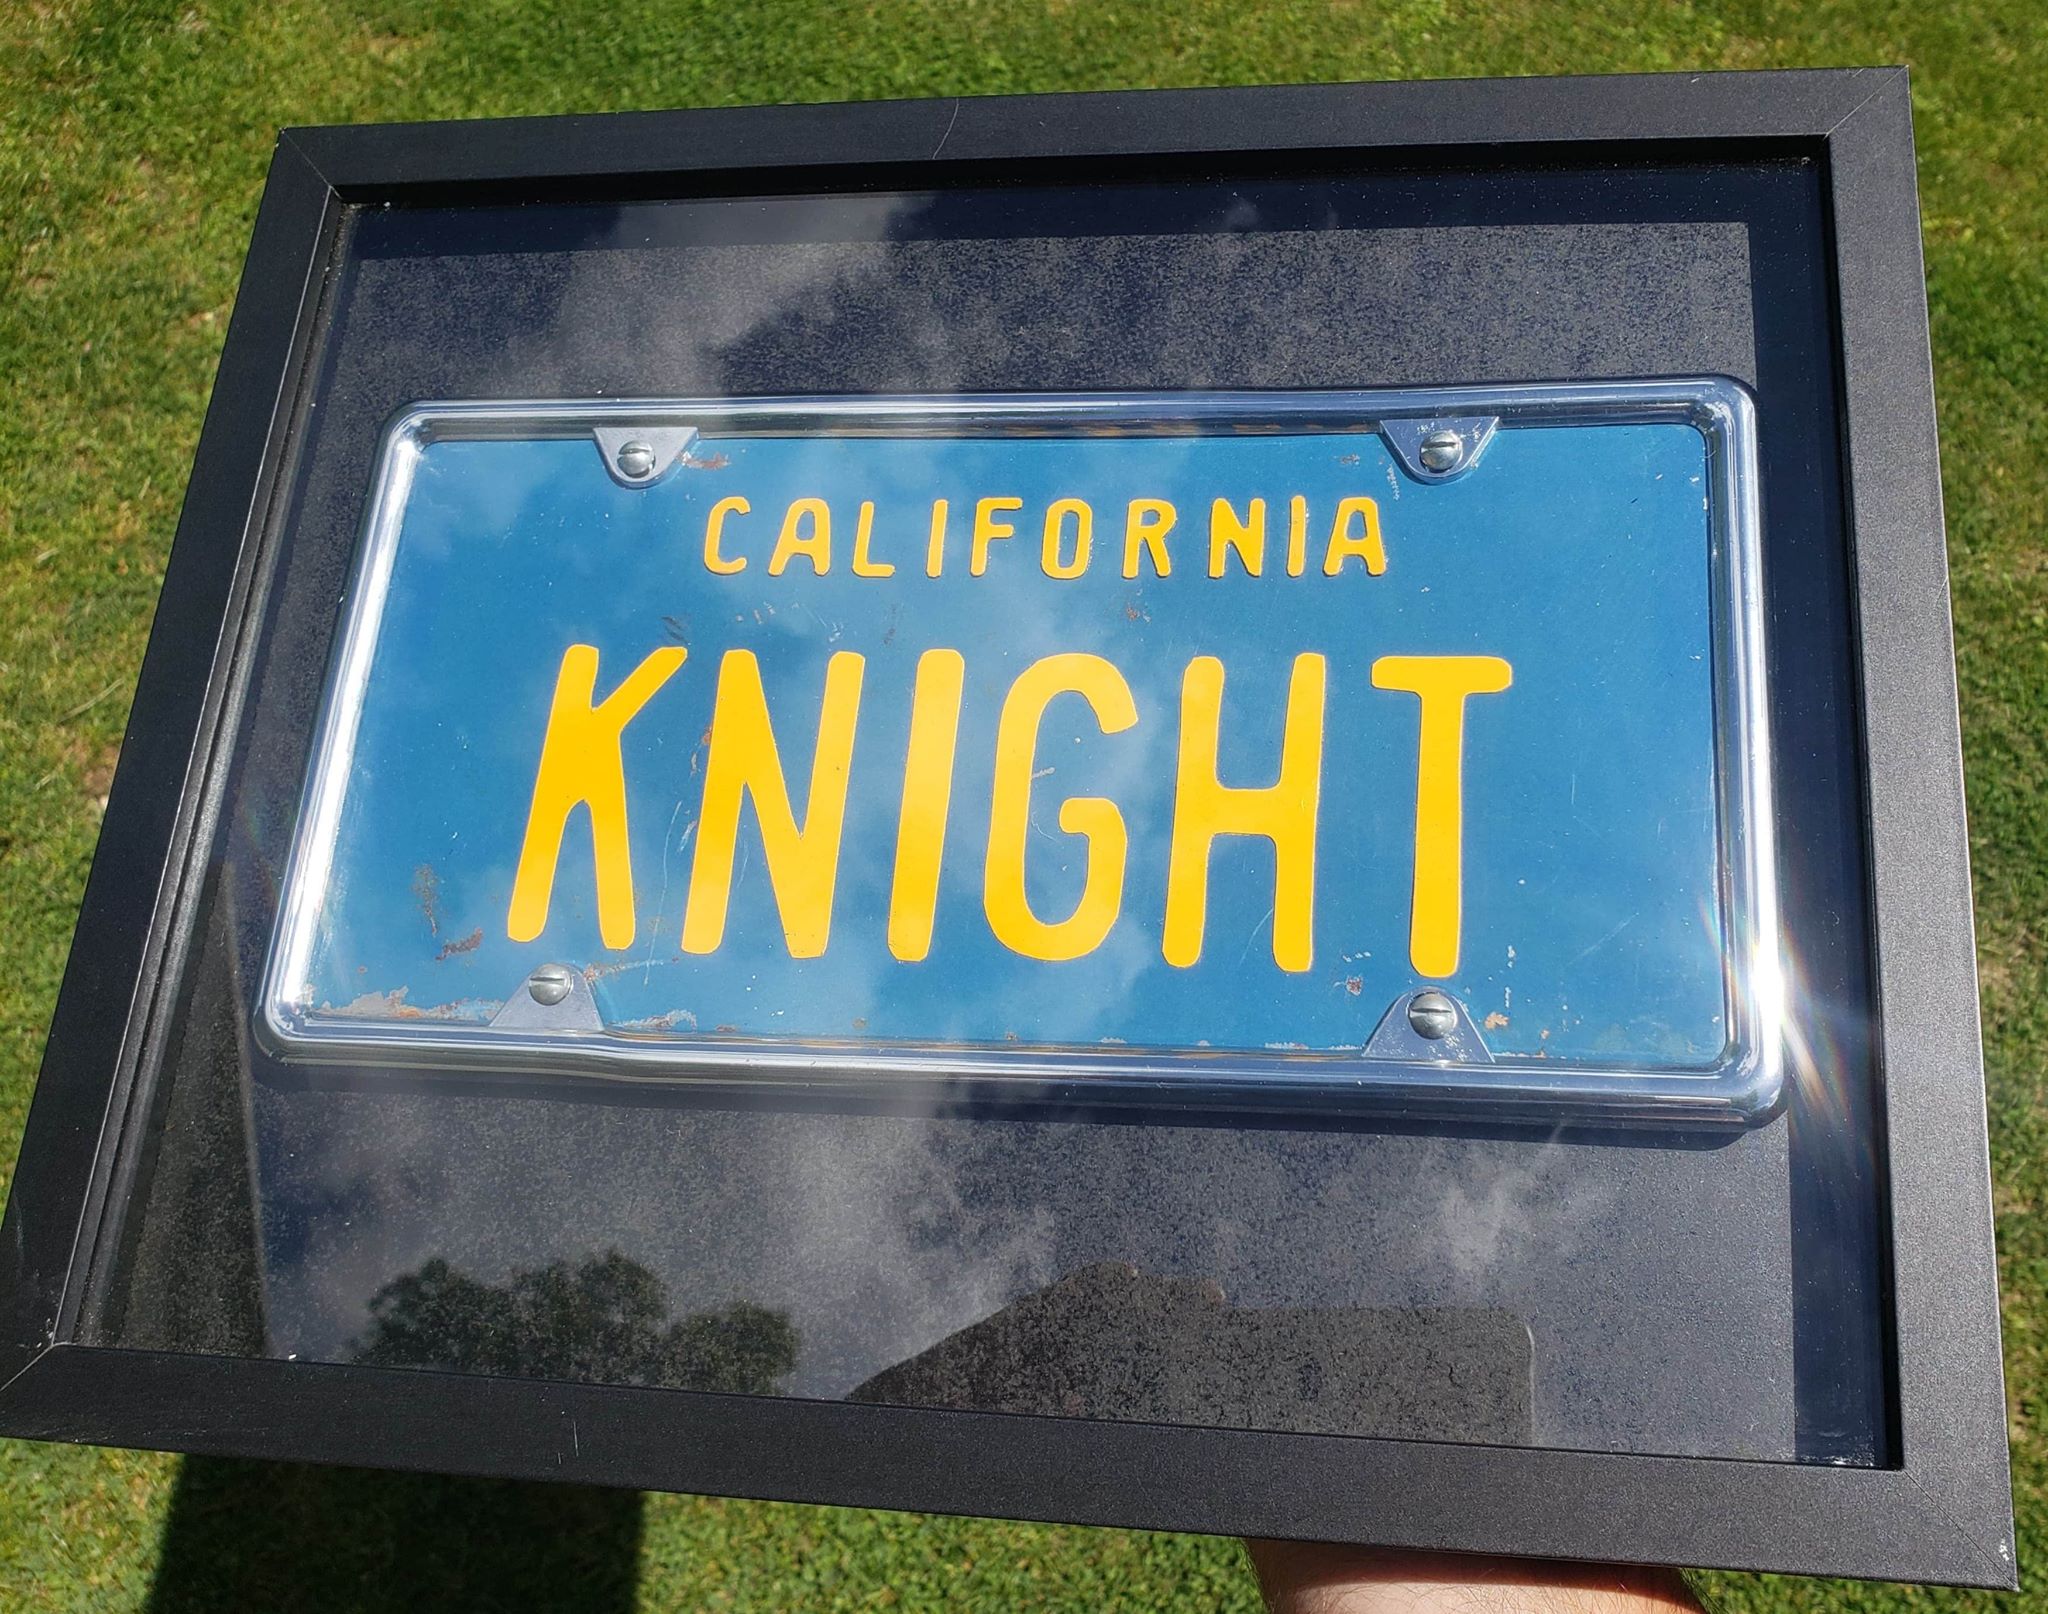 Knight Rider Original License Plate